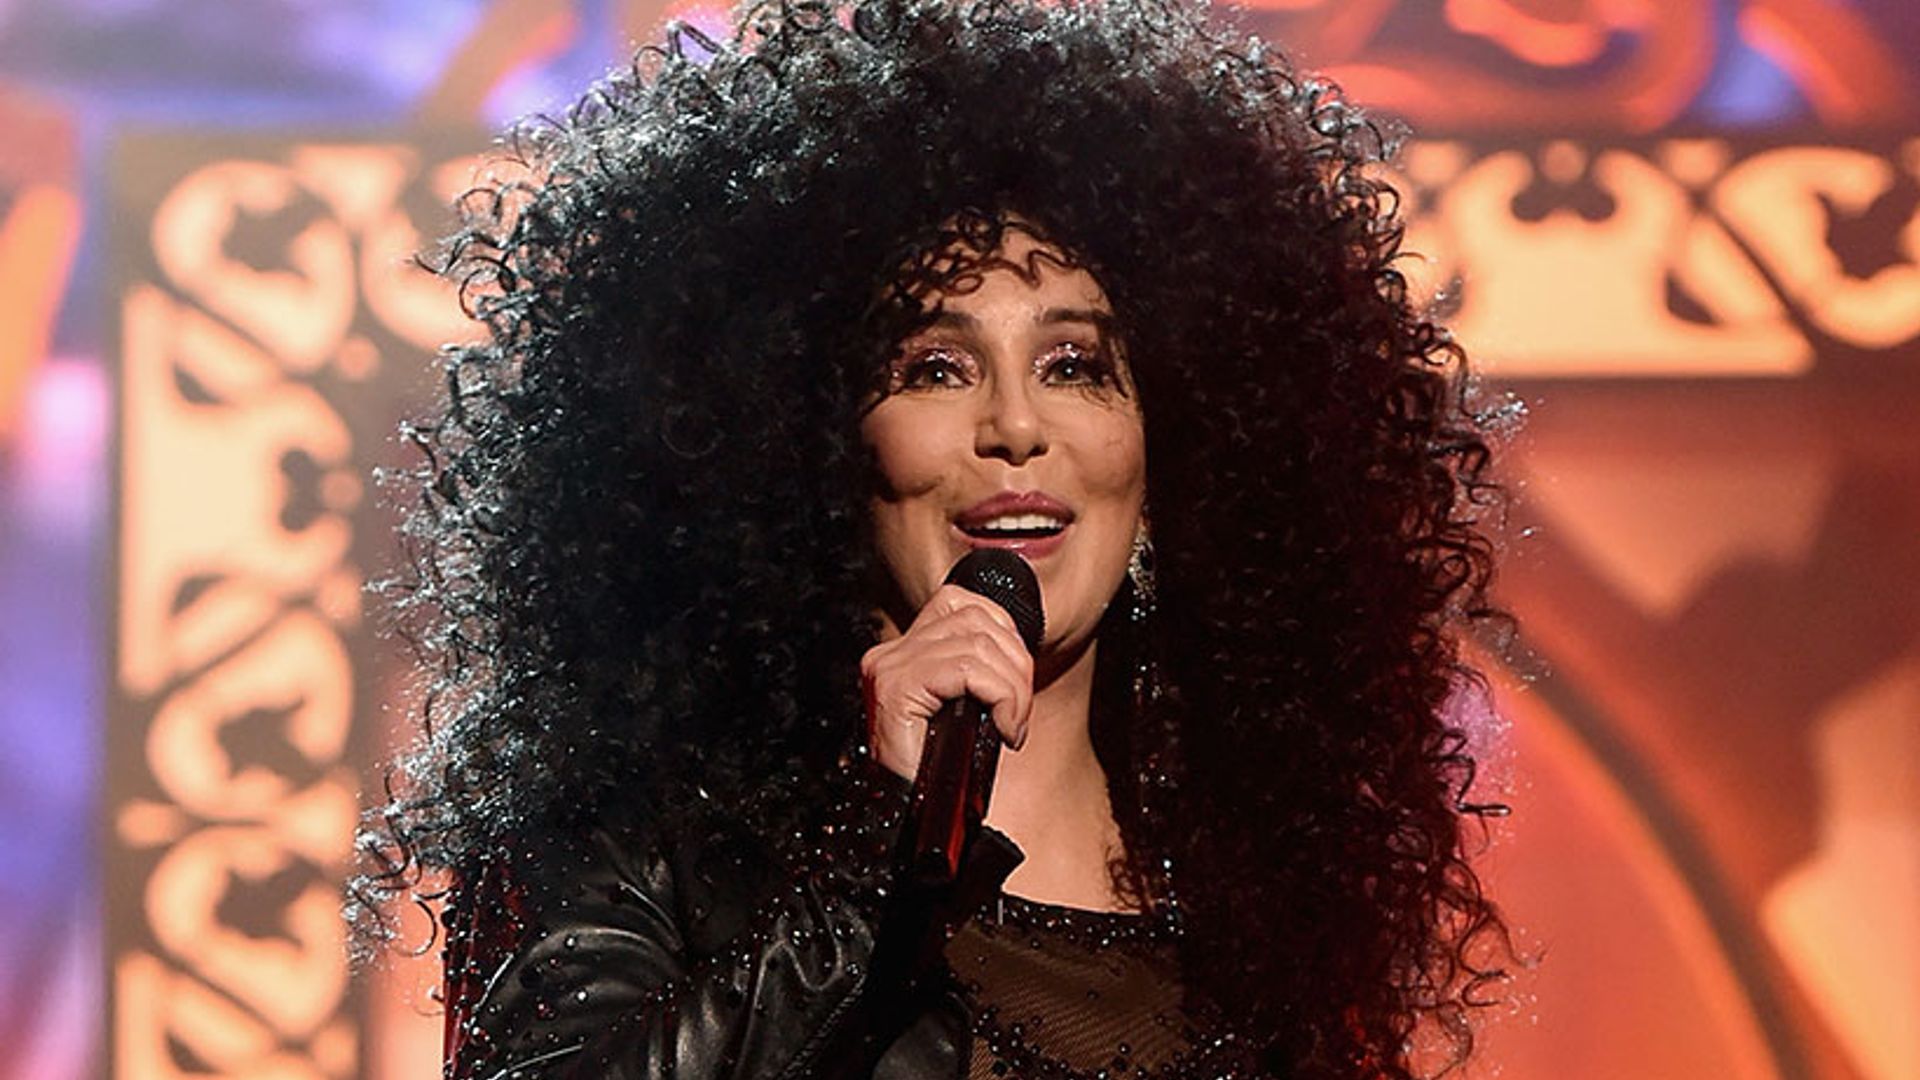 Cher returns to the big screen in the sequel to Mamma Mia!